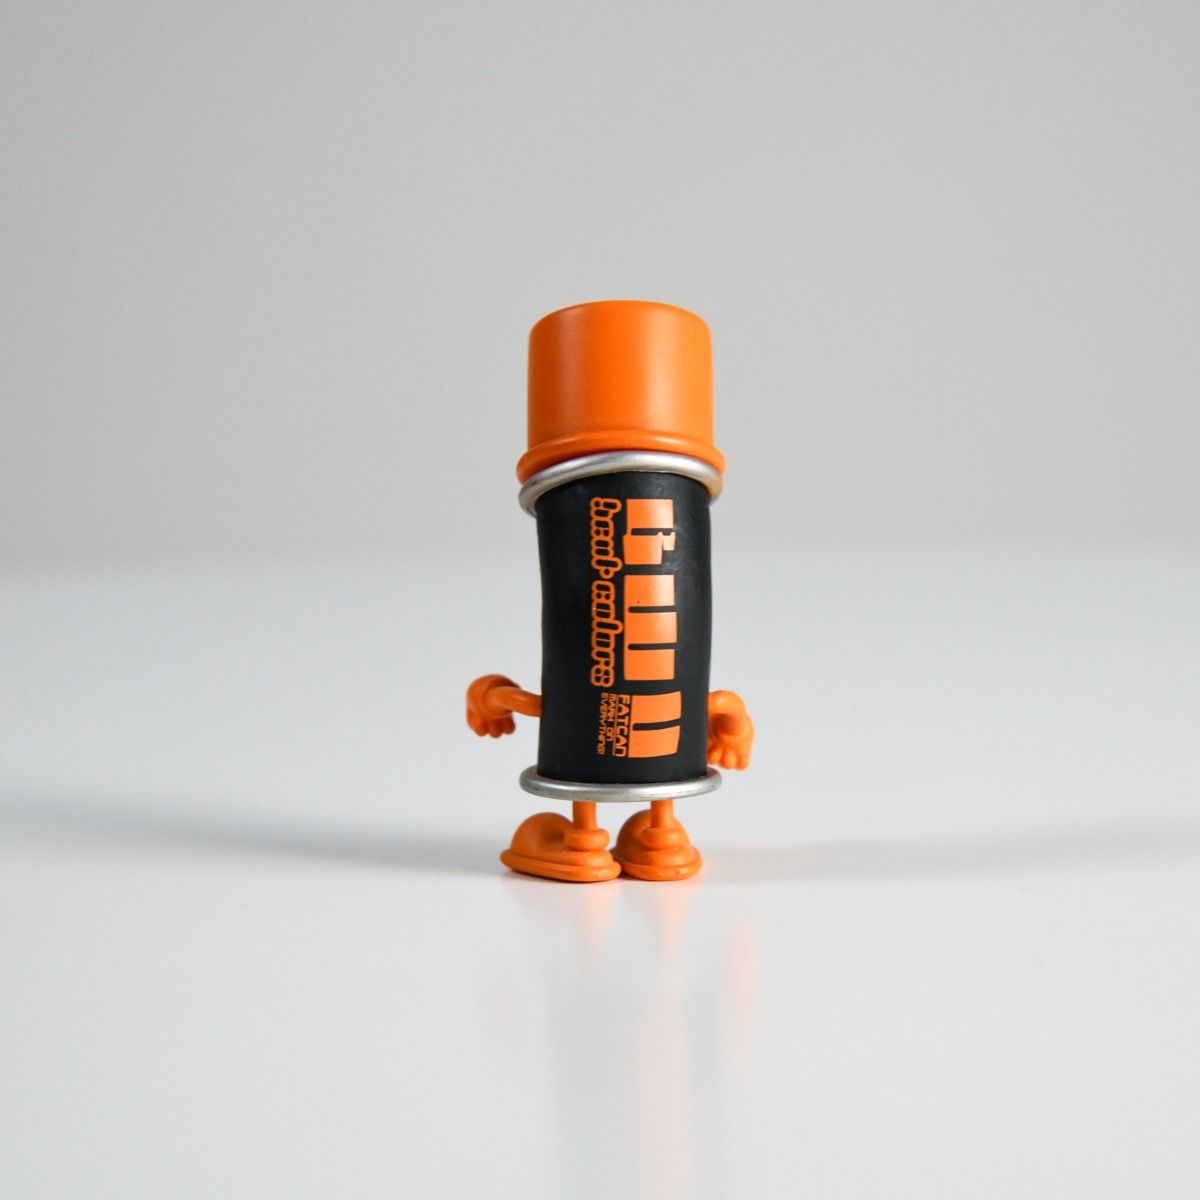 Kidrobot x MAD Bent World Vandals Fat Can (Orange)